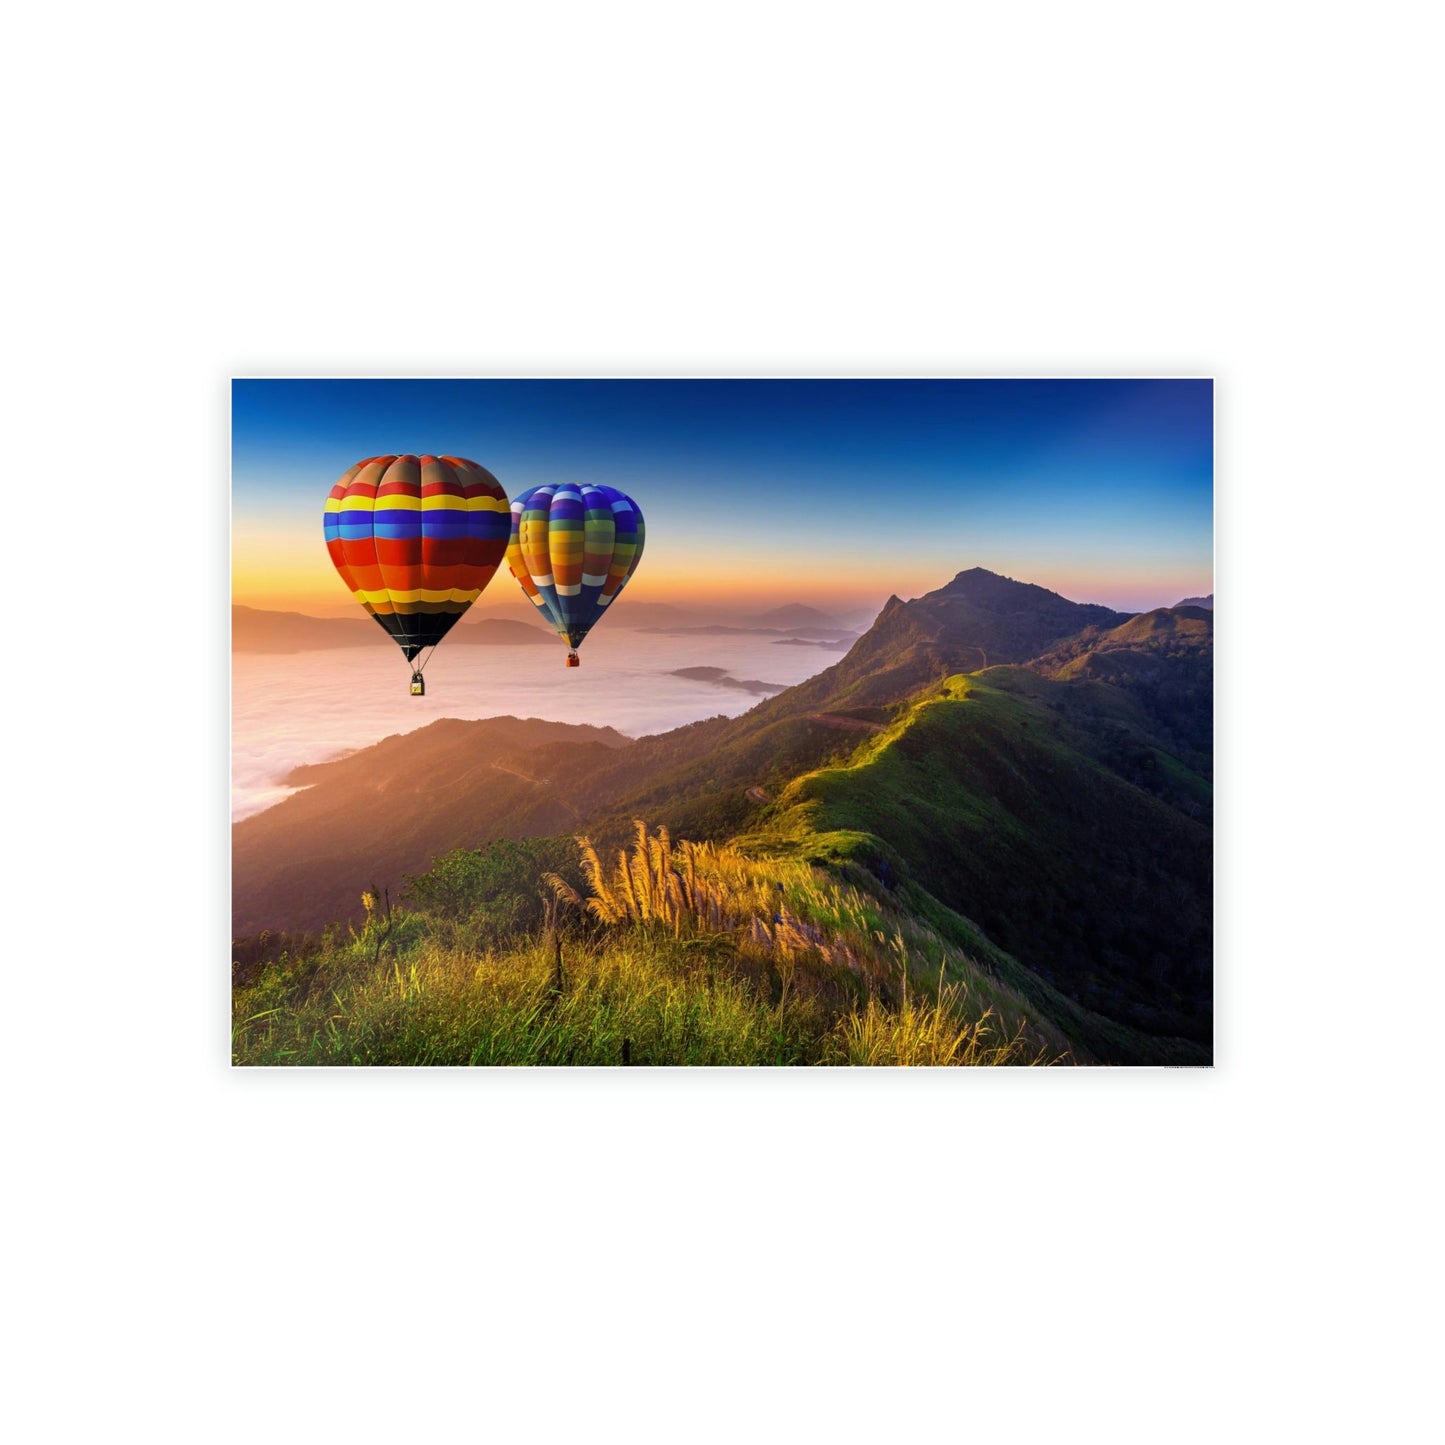 Soaring High: A Beautiful Canvas Print of Colorful Hot Air Balloons